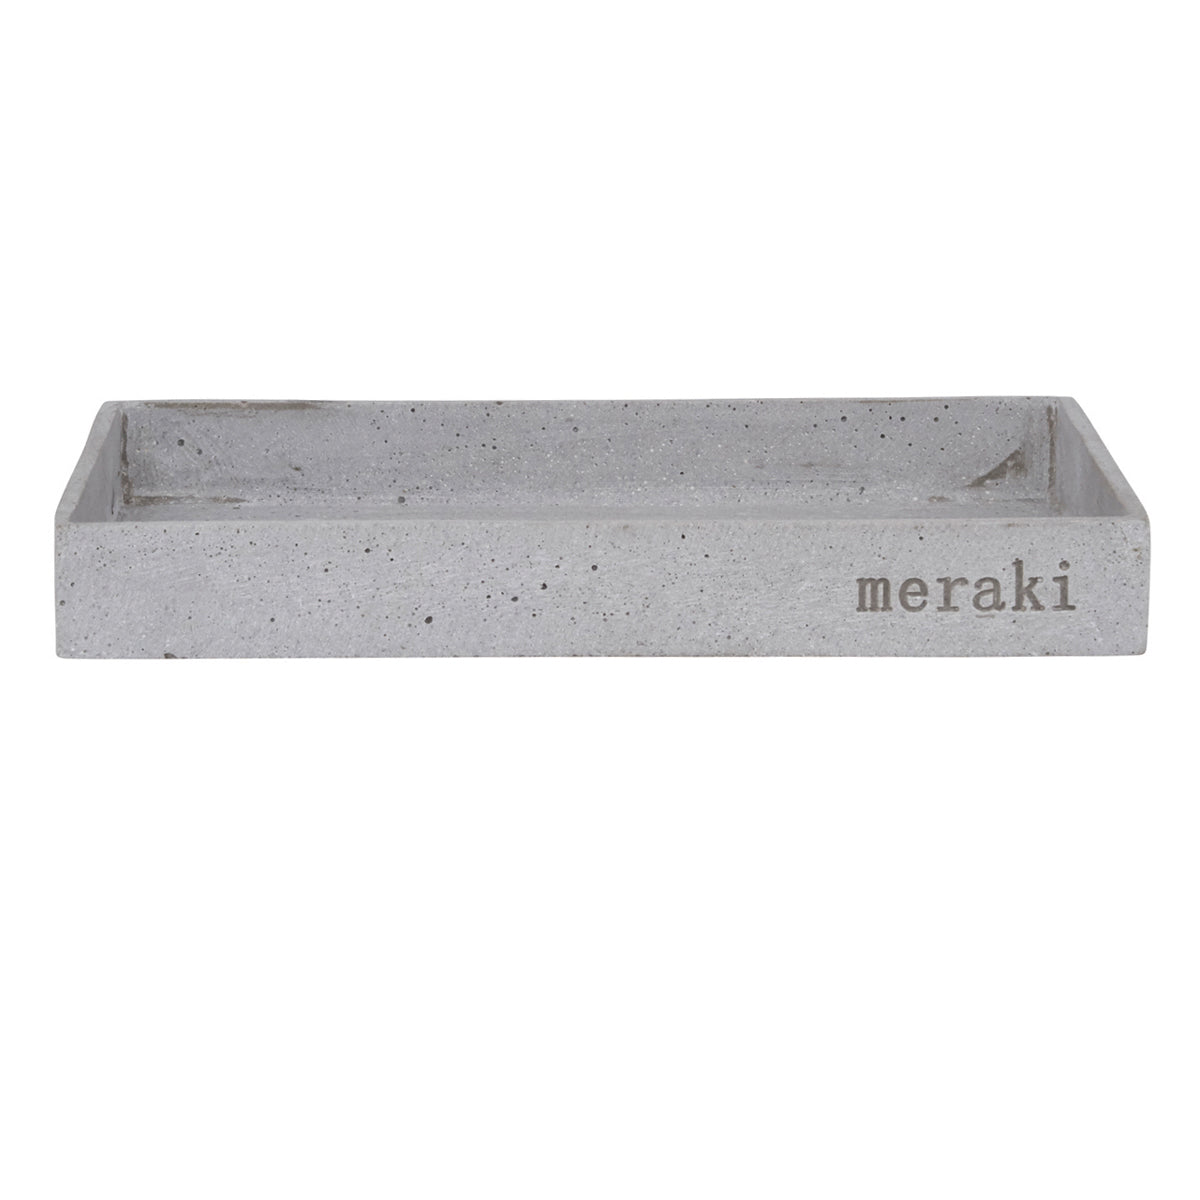 Meraki grey tray pulverised stone and resin